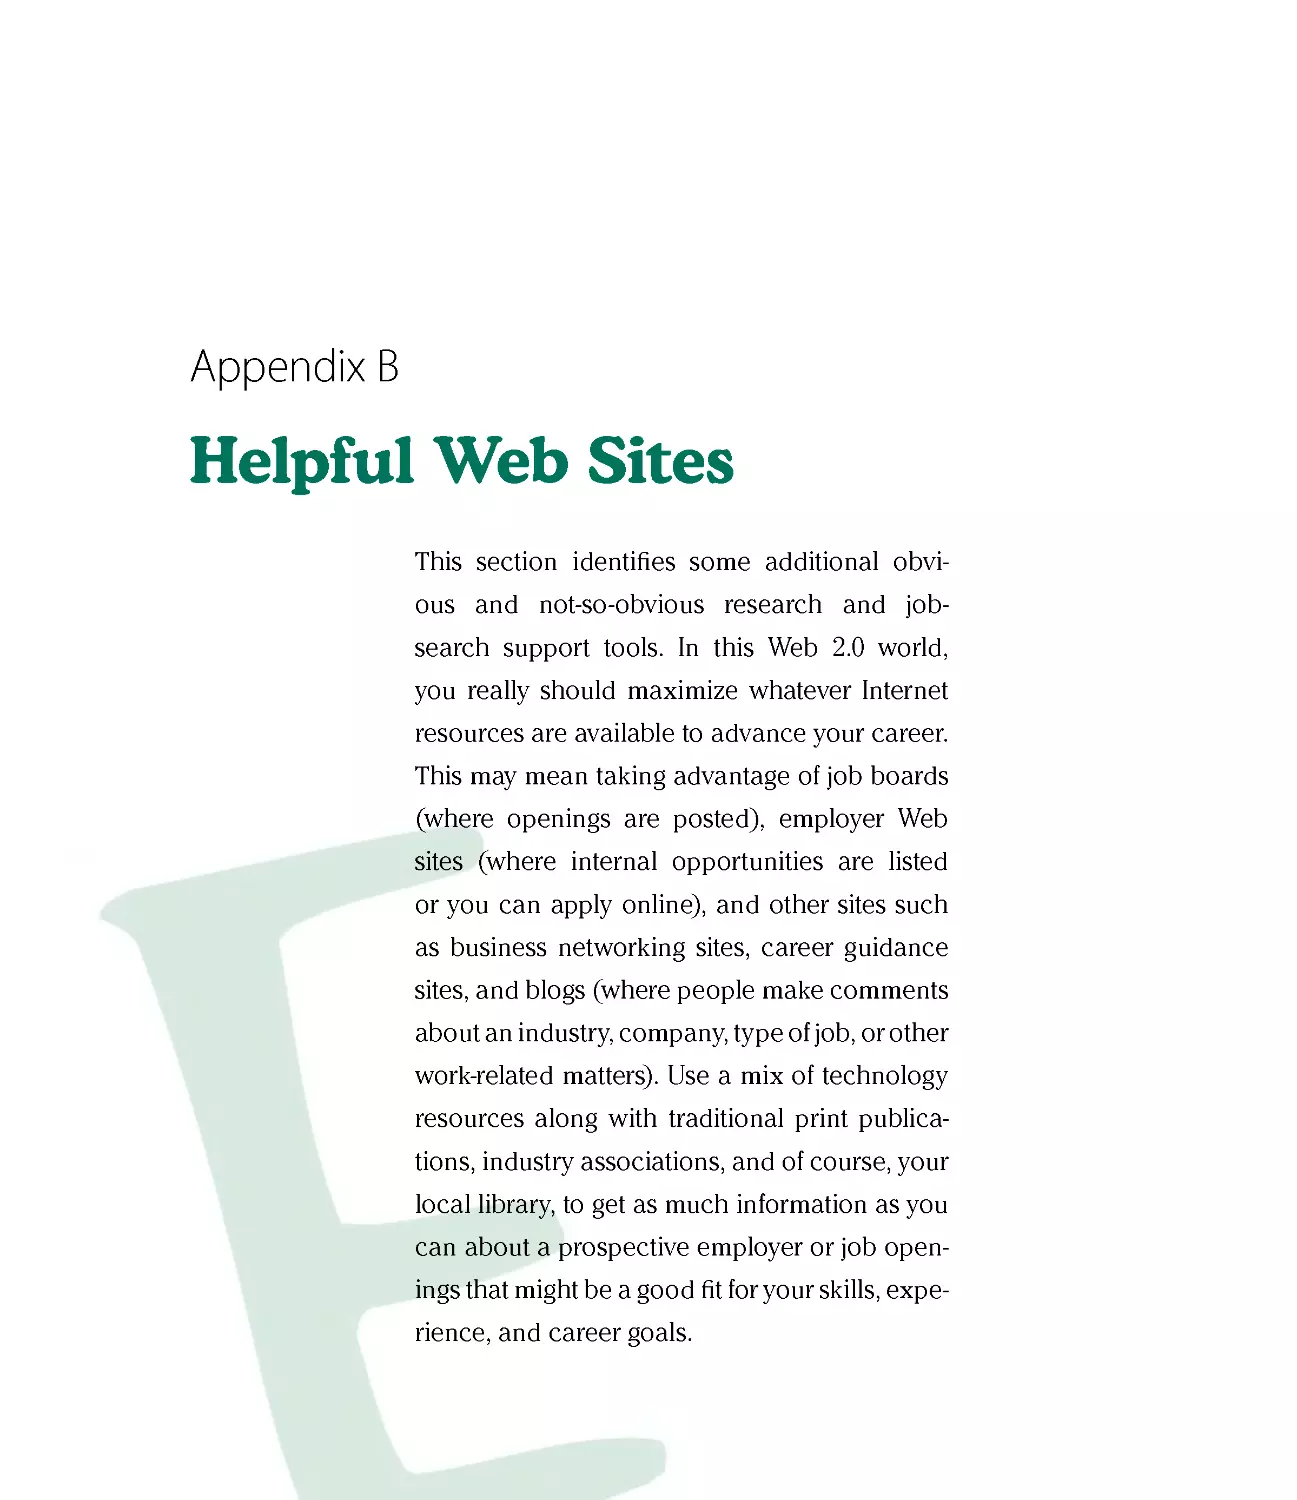 Appendix B: Helpful Web Sites